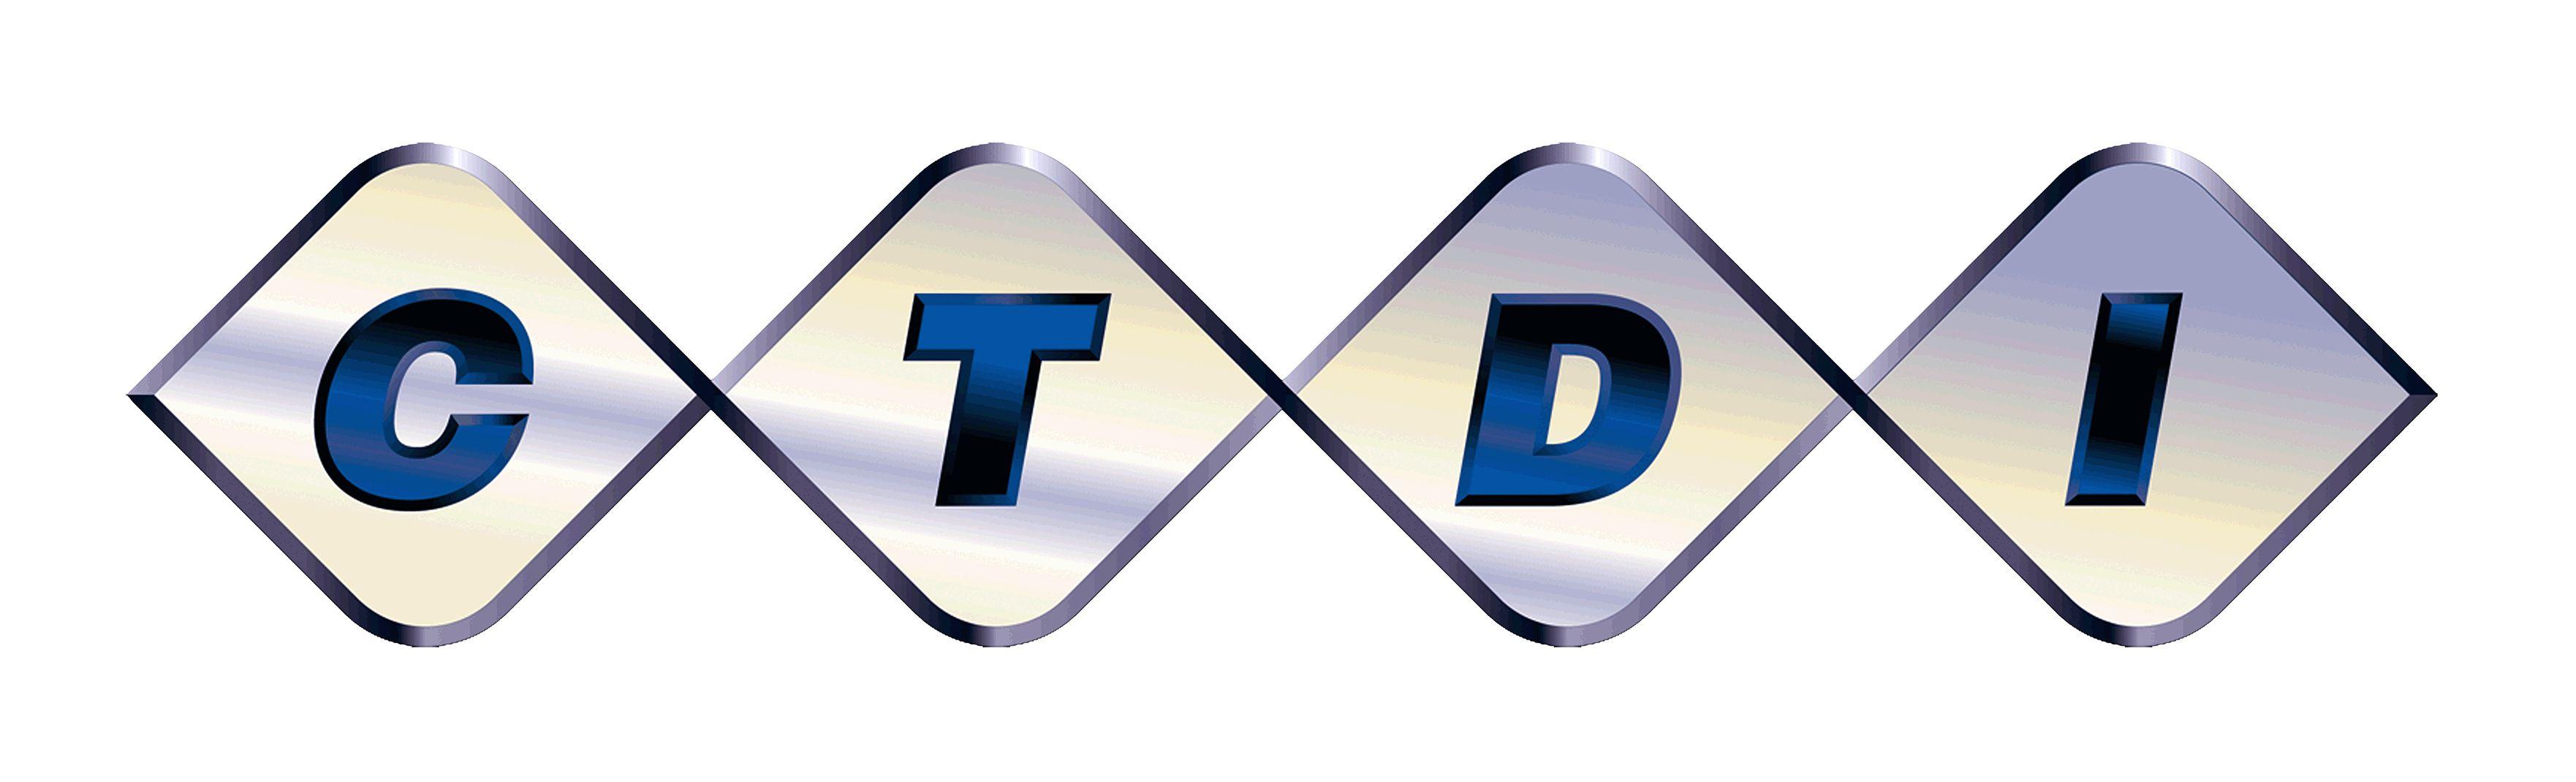 Ctdi Logo - CTDI Logo 2